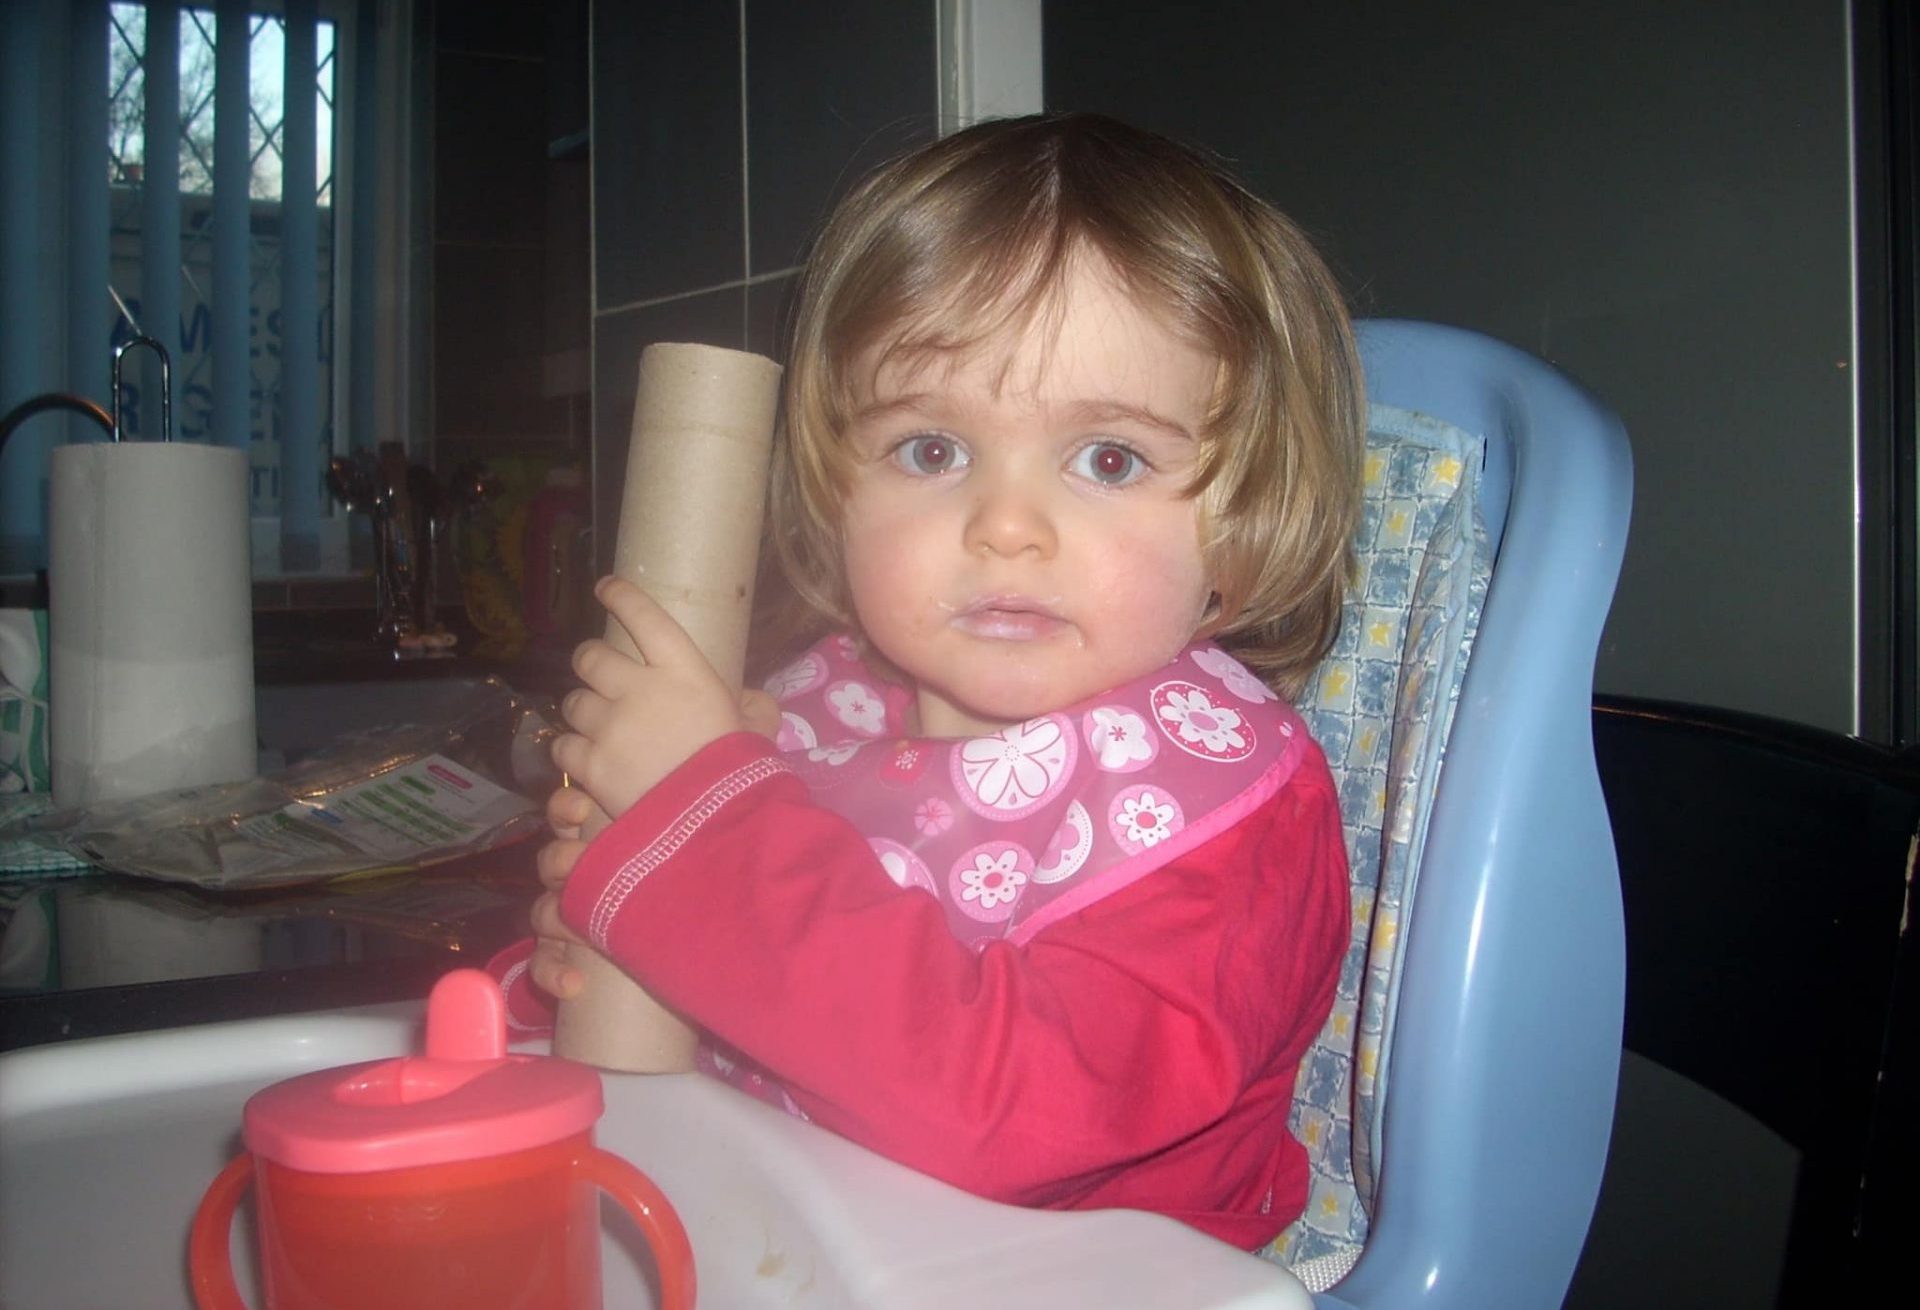 Niamh Scanlon aged 15 months